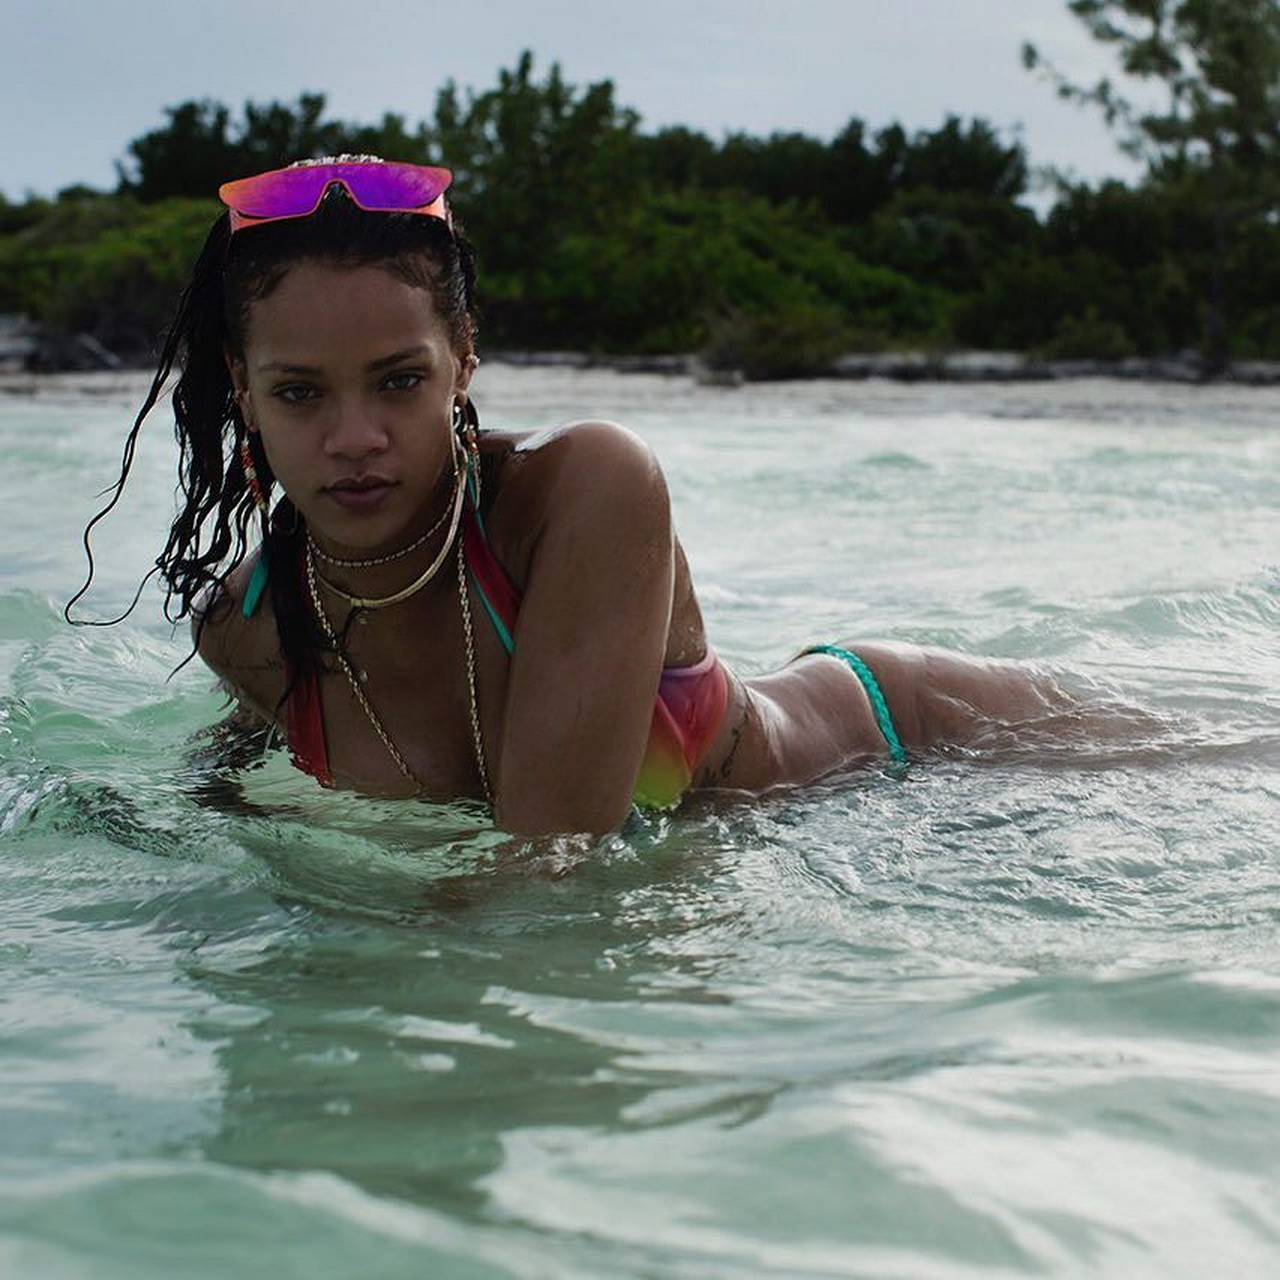 Rihanna in see through top, sexy bikini in Barbados HQ Instagram photos 22.jpg